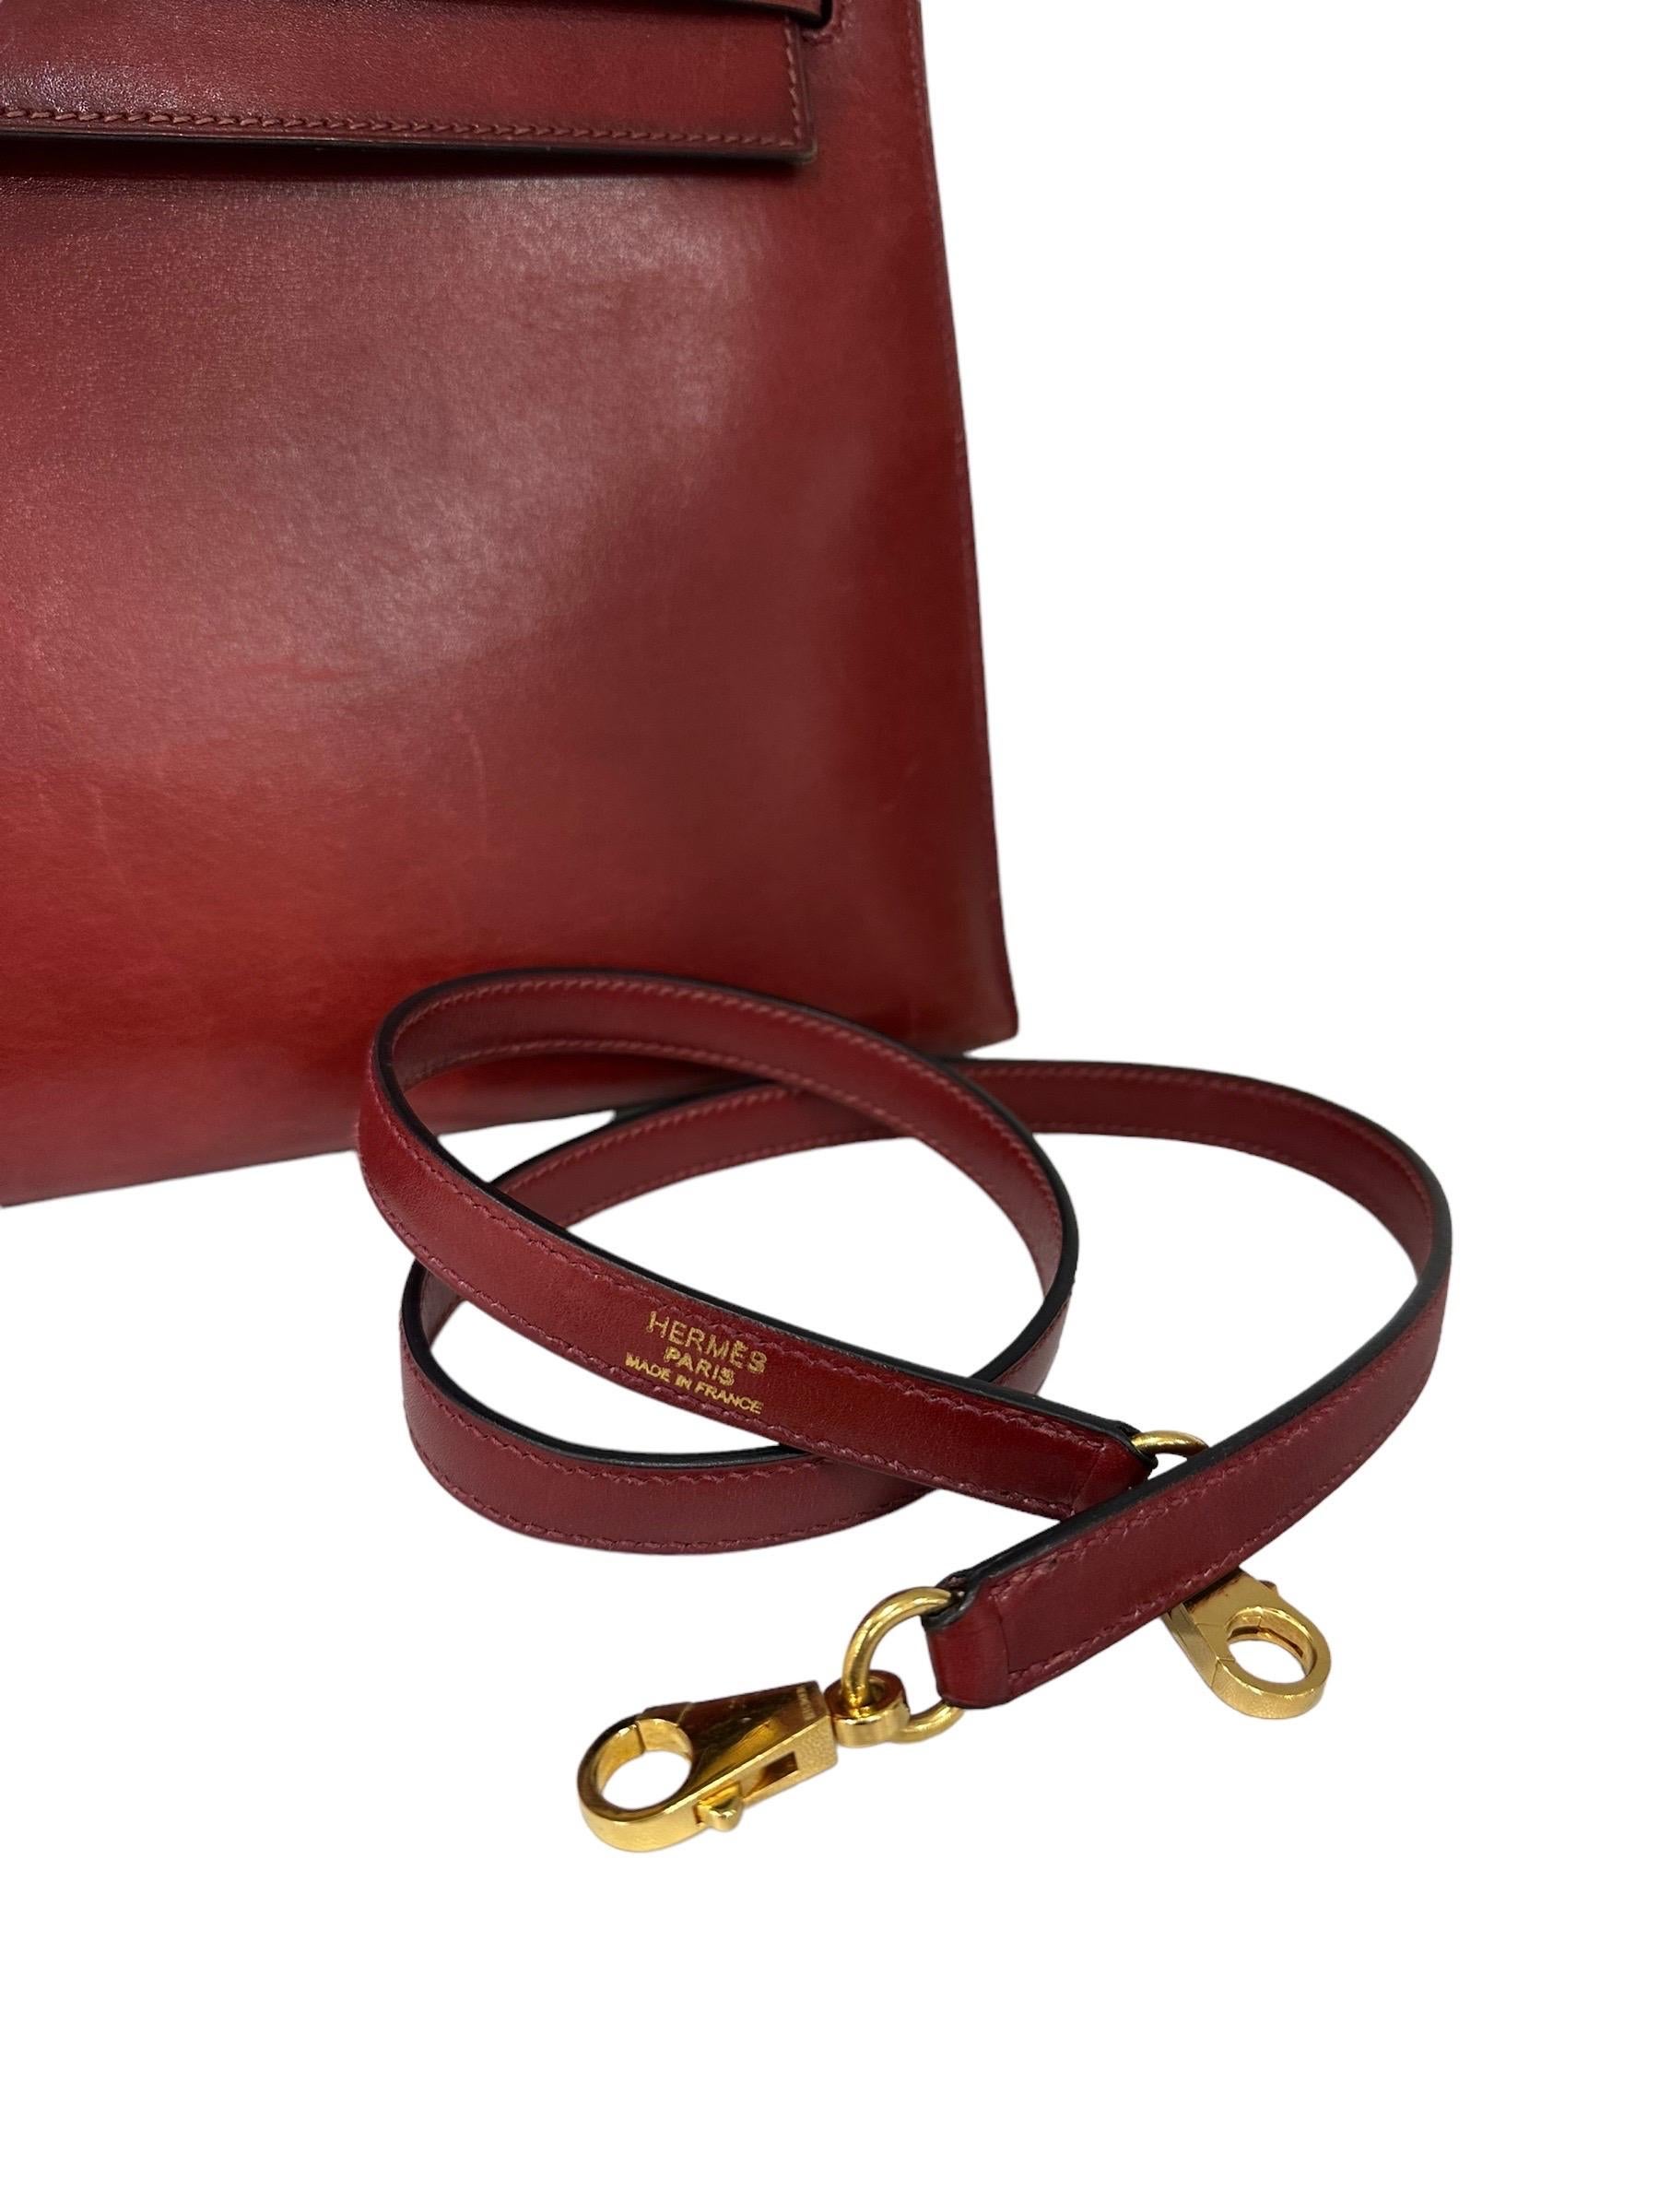 2008 Hermès Kelly 32 Box Calf Leather Rouge H Top Handle Bag 9